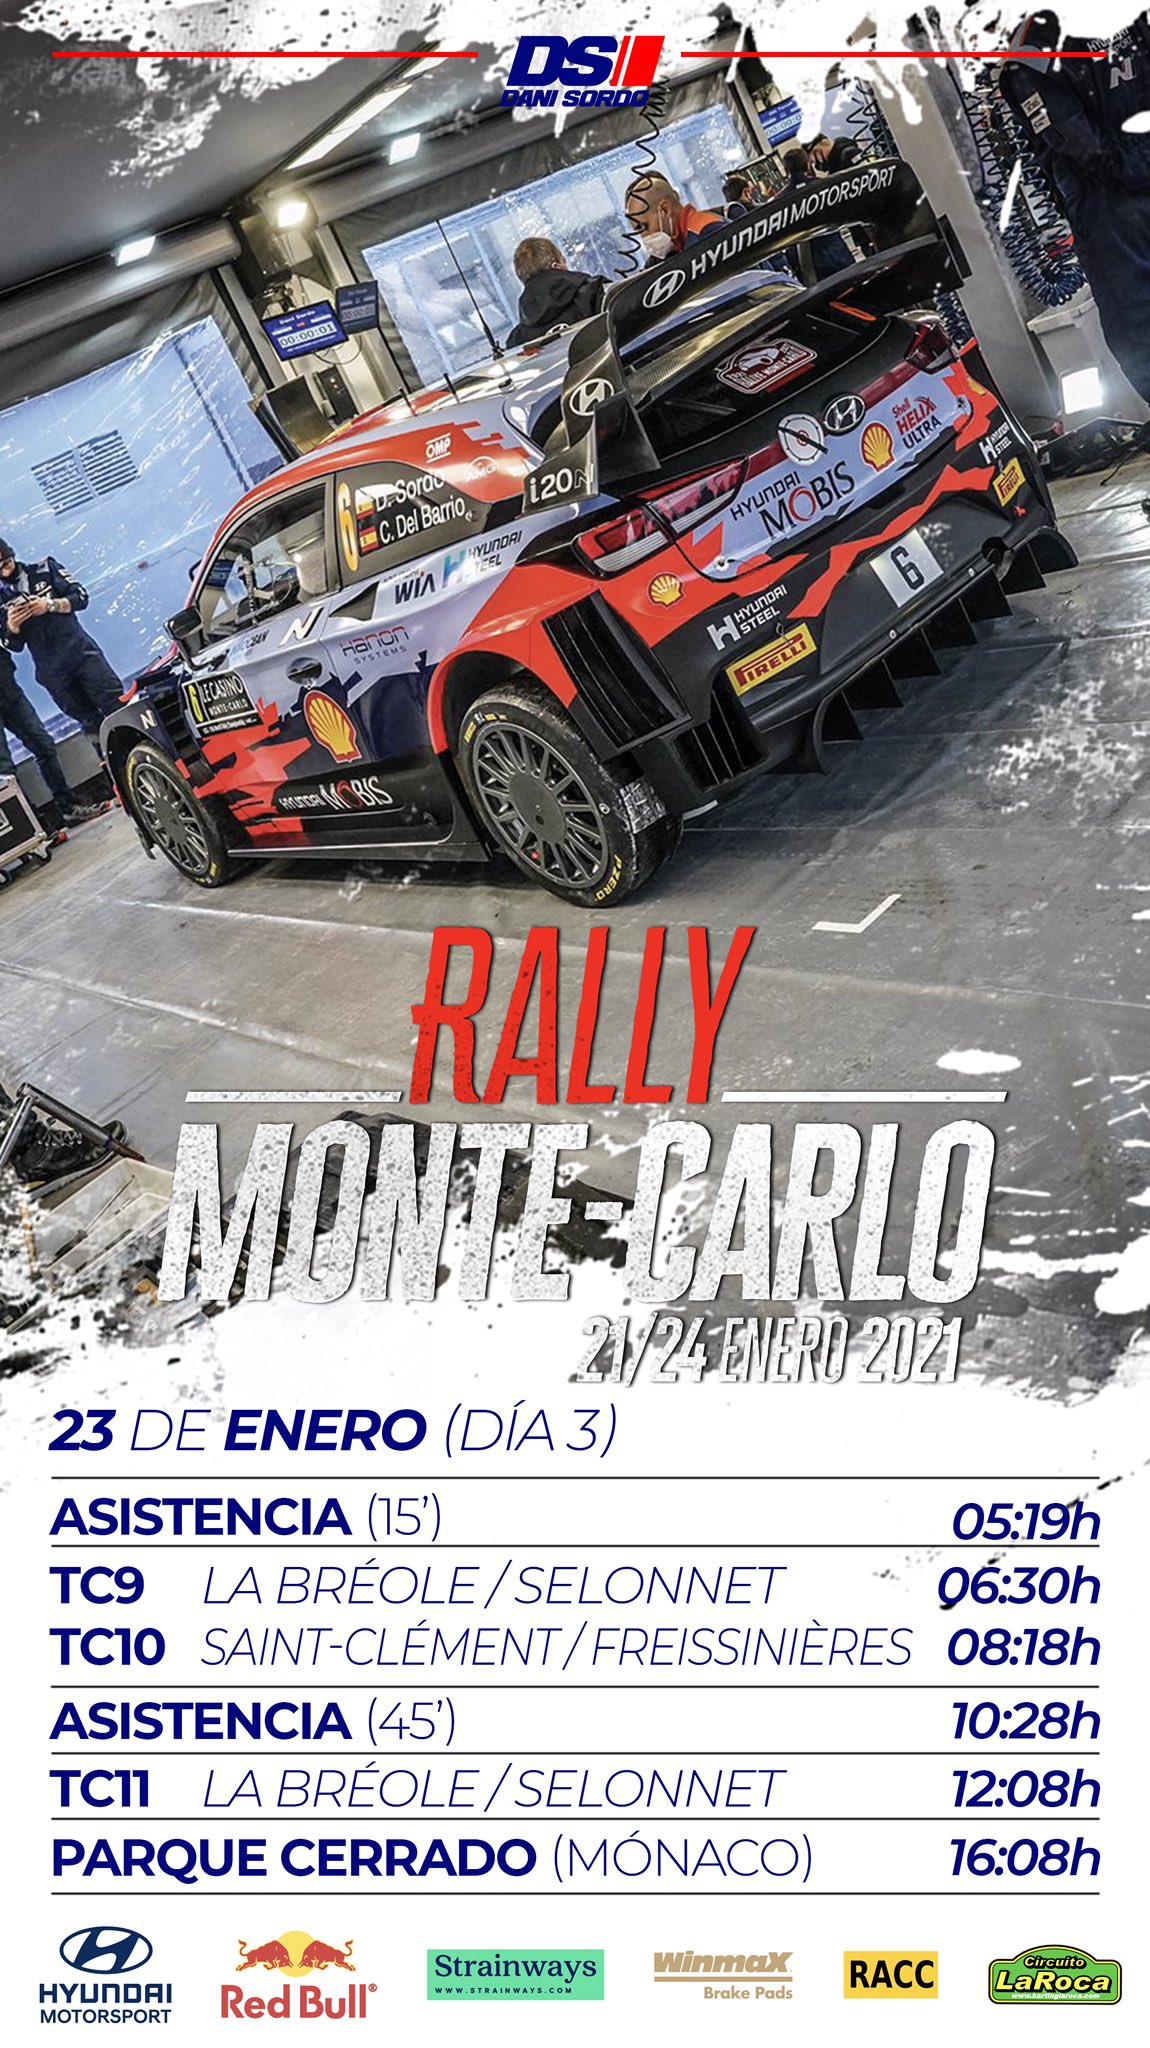 57 - WRC: 89º Rallye Automobile de Monte-Carlo [18-24 Enero] - Página 9 EsY-9MMXMAYHysf?format=jpg&name=large